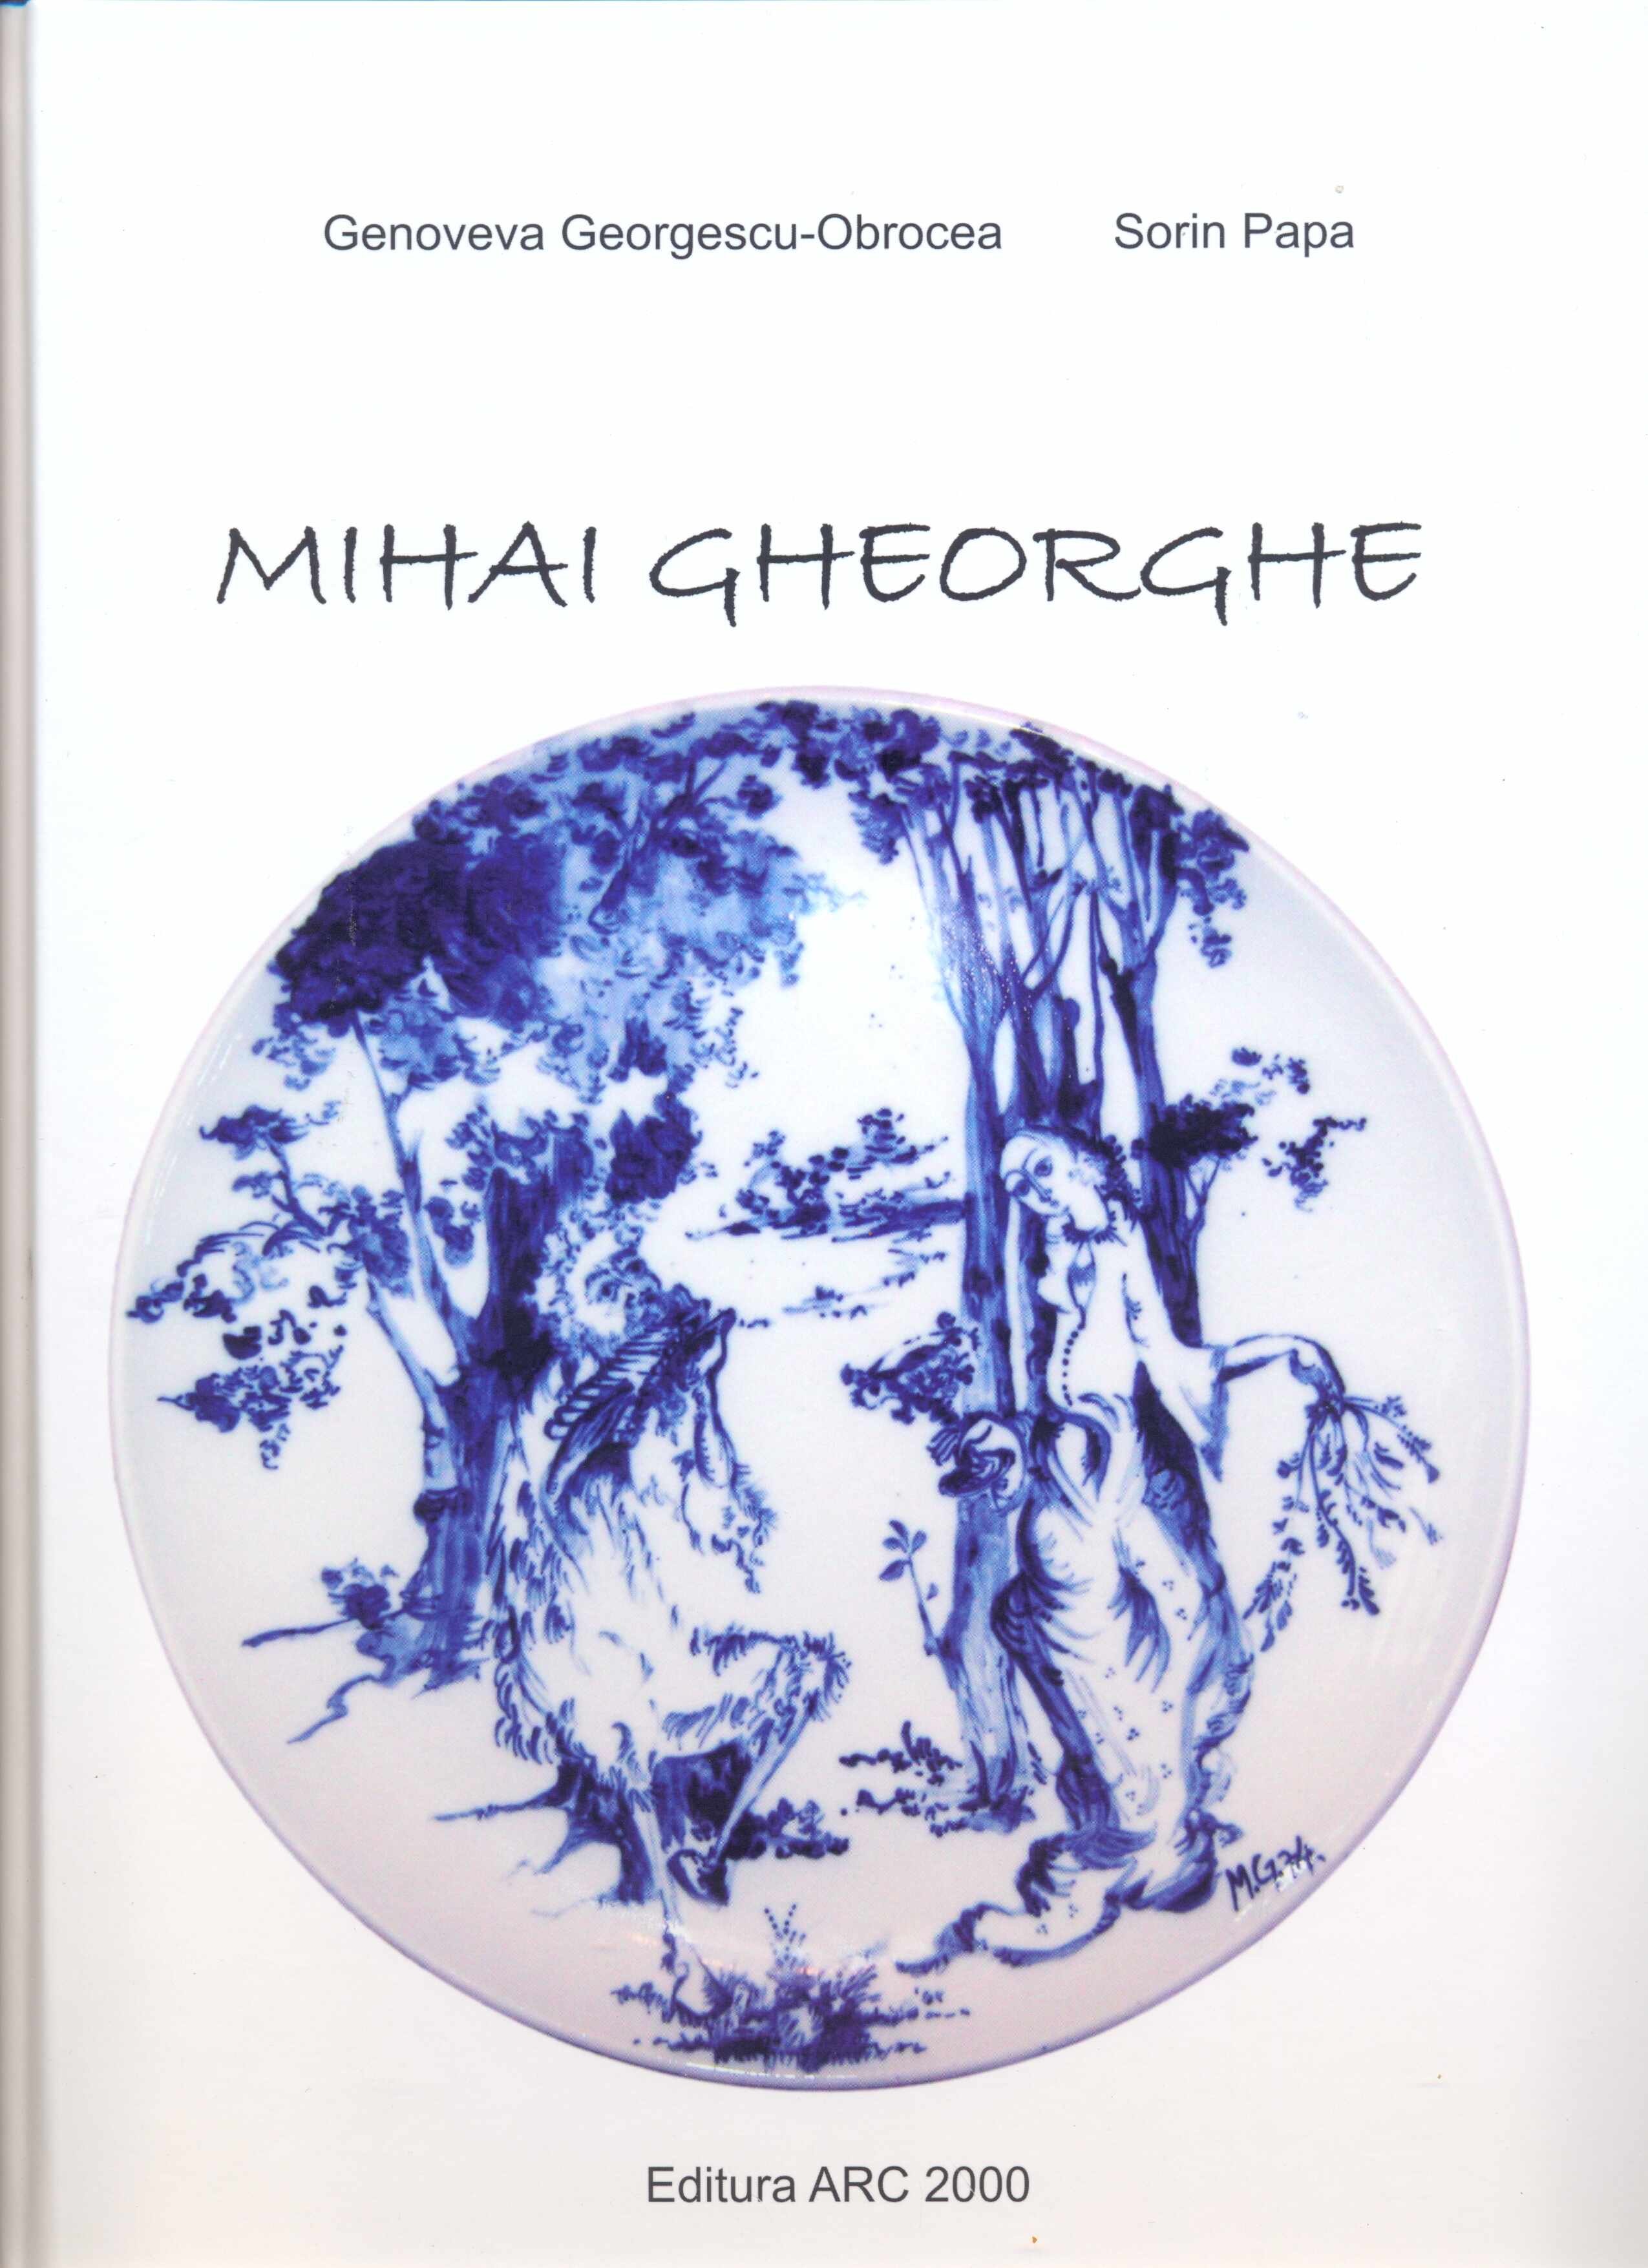 Album Mihai Gheorghe | Genoveva Georgescu-Obrocea, Sorin Papa